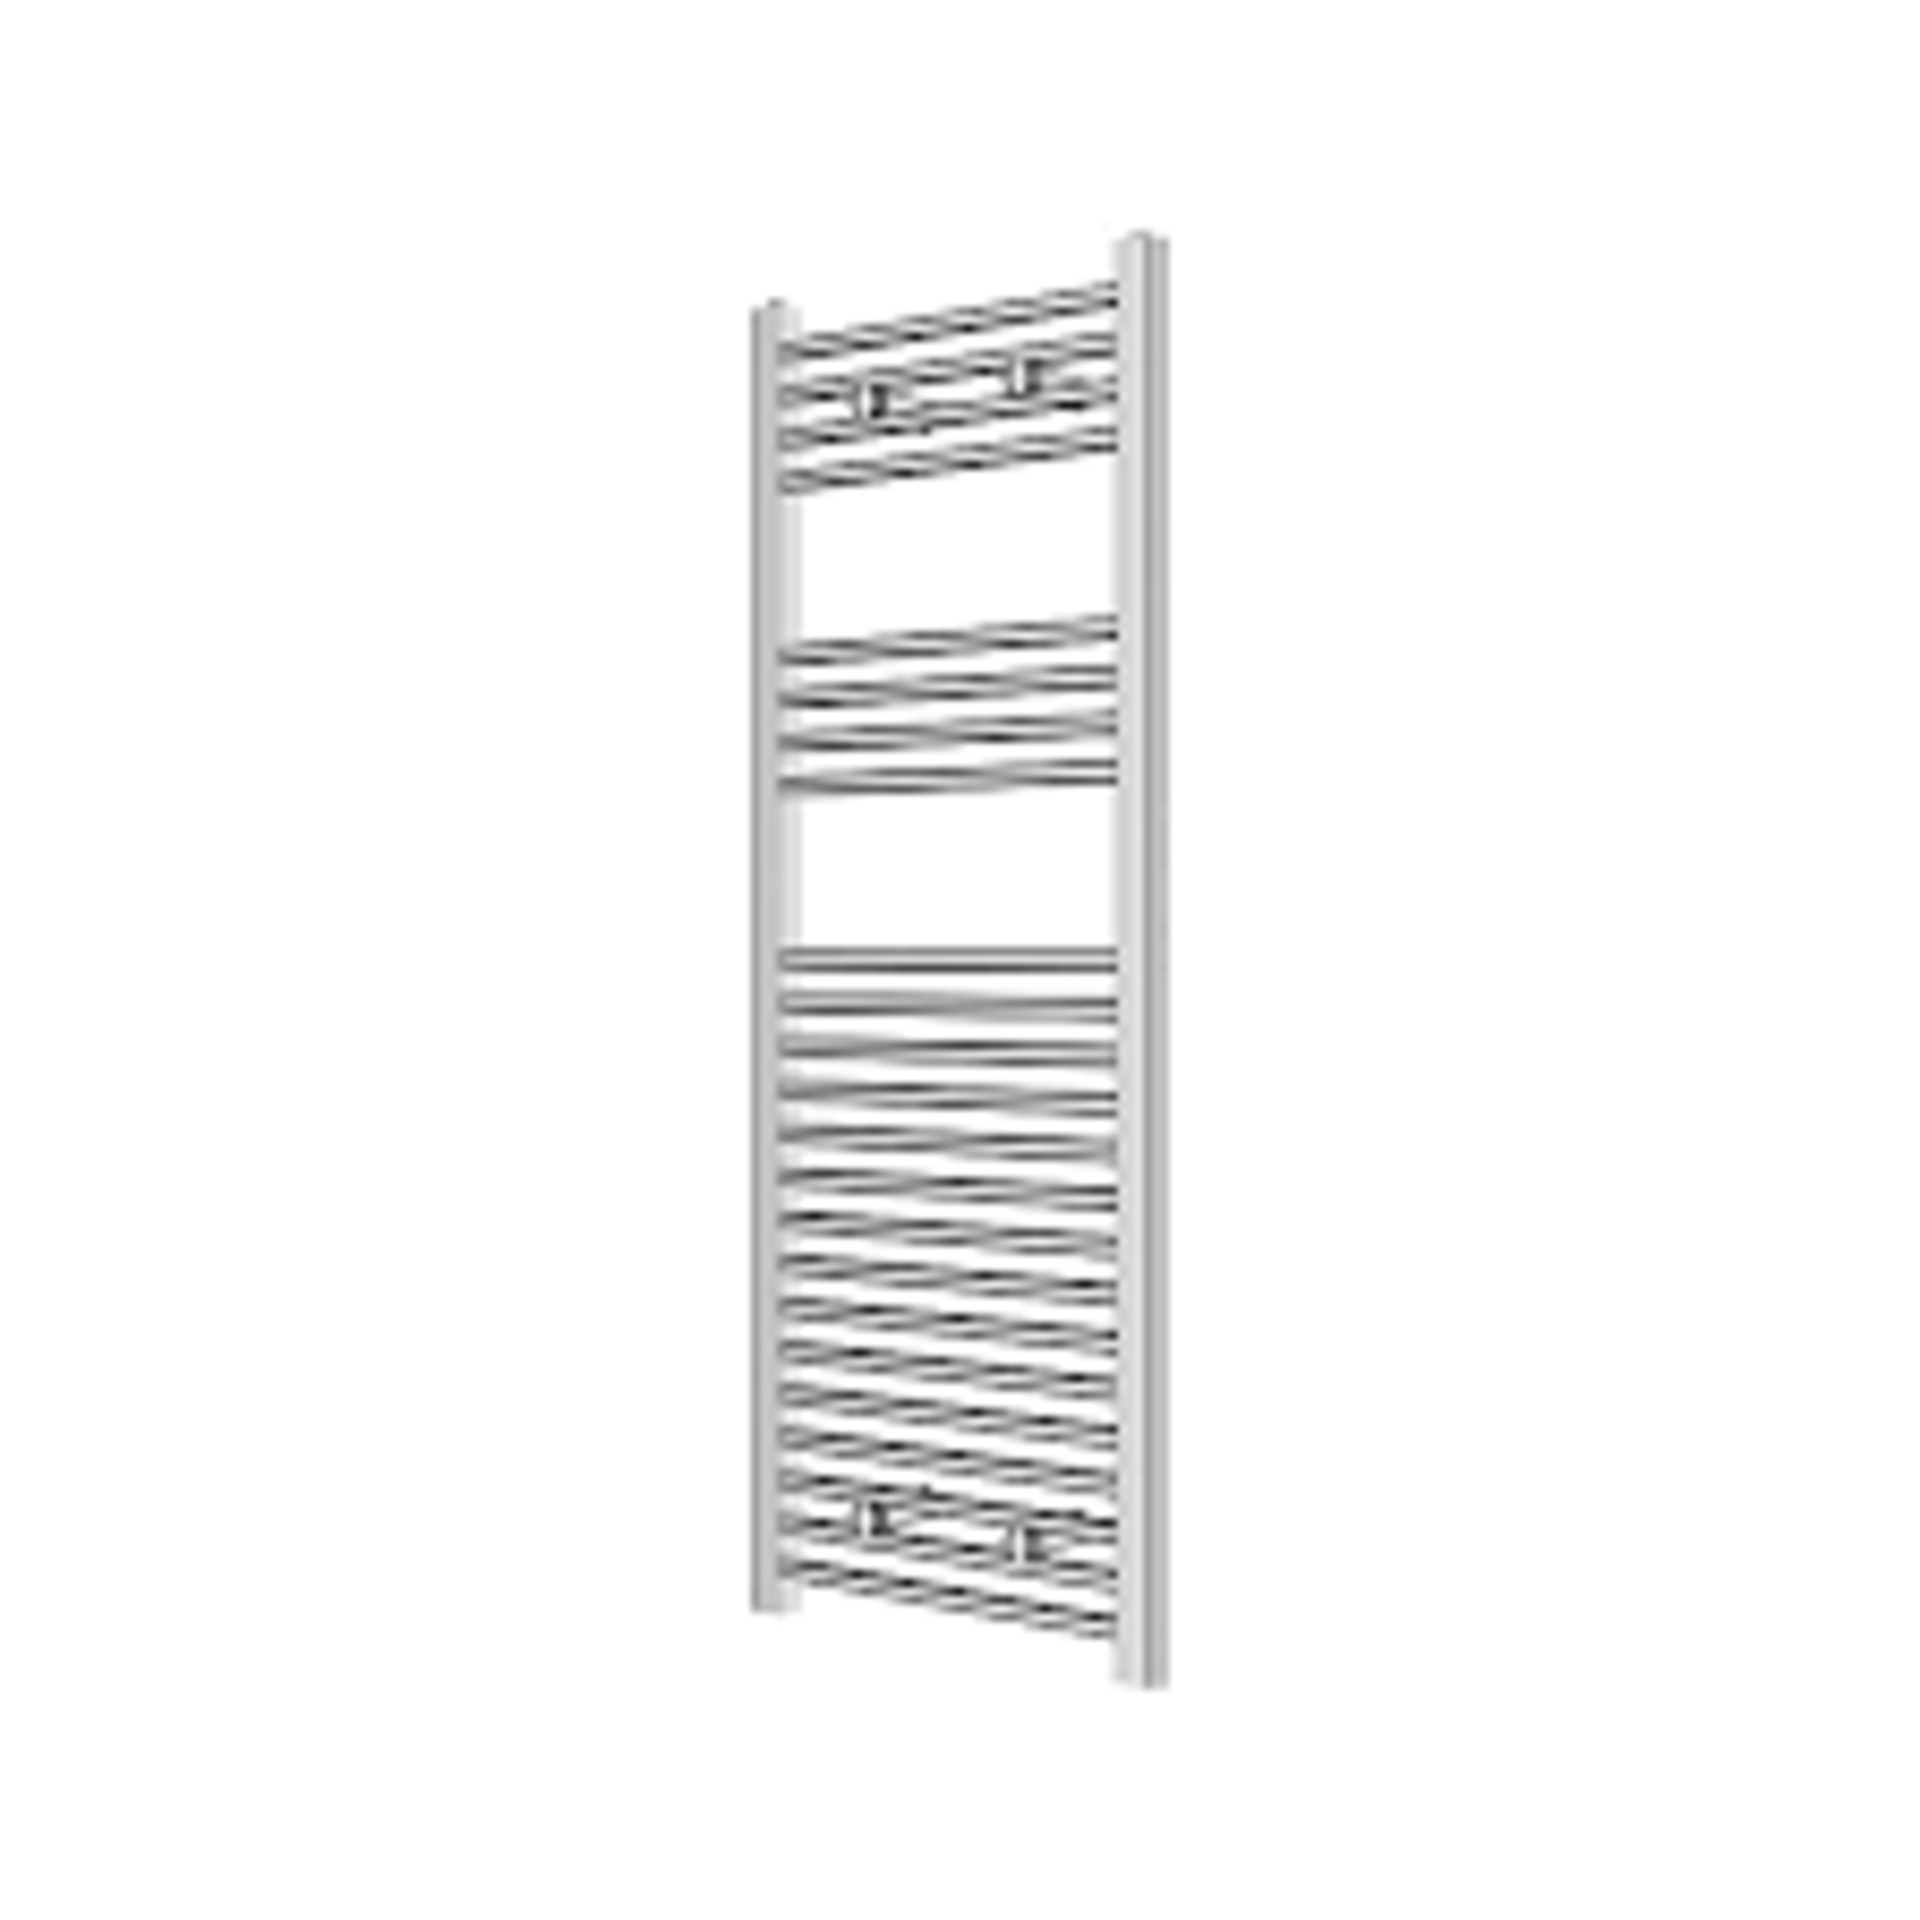 Flomasta Flat Chrome effect Vertical Flat Towel radiator. 450x1200mm. - S2